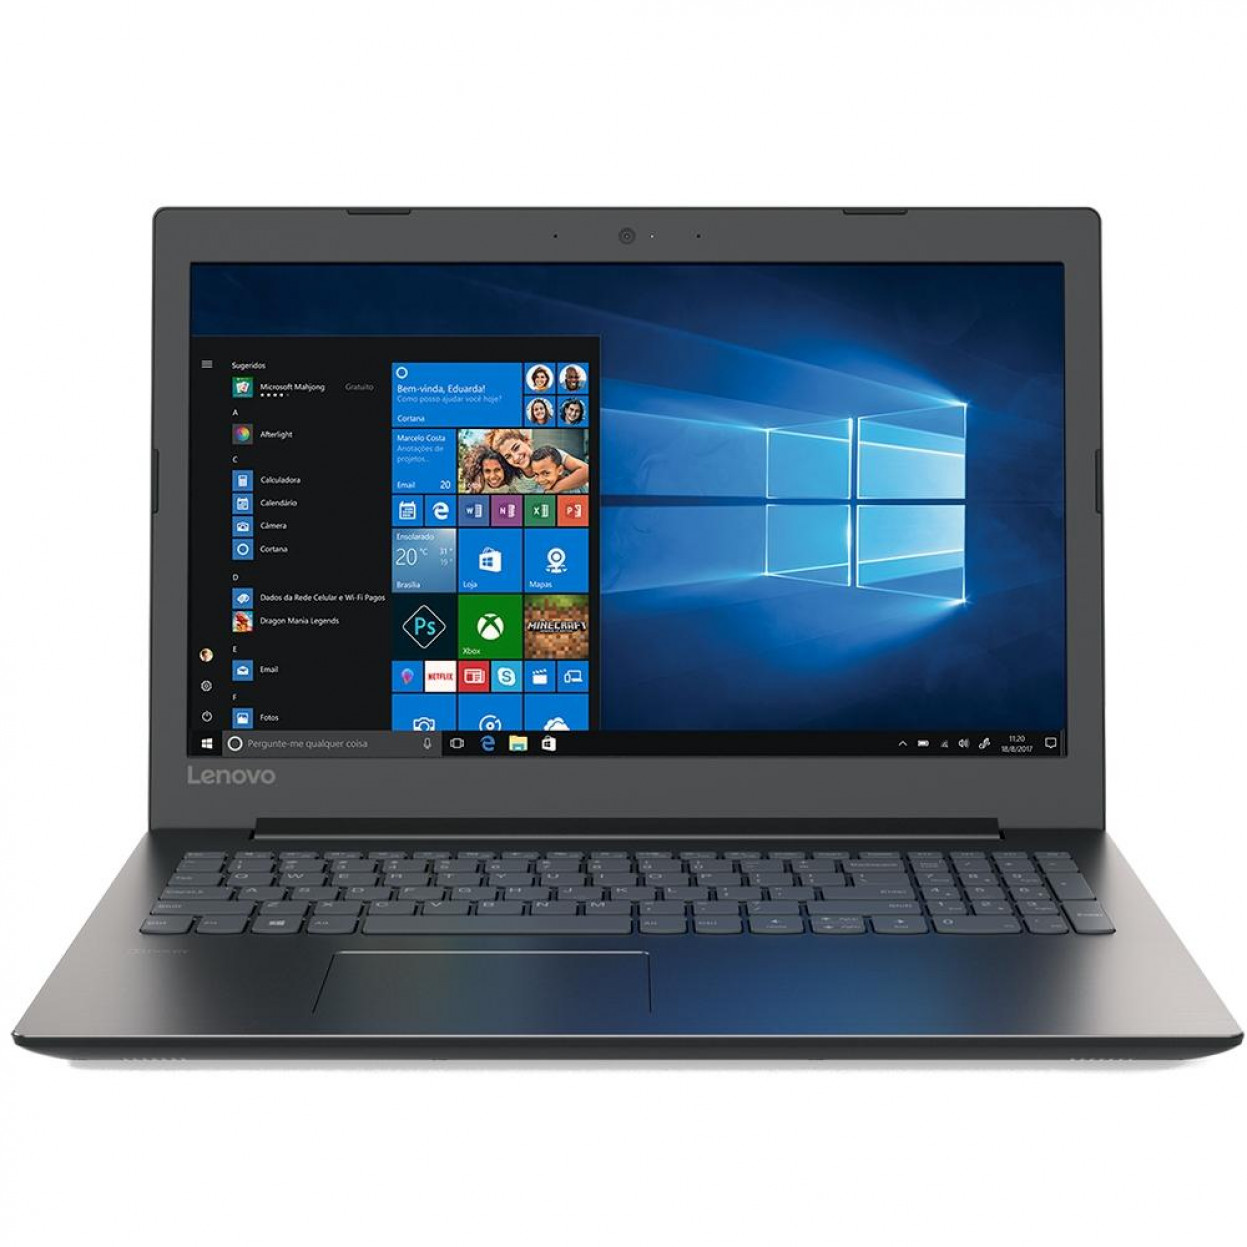 Notebook Lenovo B330 Core I5 8250u Memoria 8gb Ddr4 Ssd 240gb Tela 15.6' Fhd Windows 10 Home 